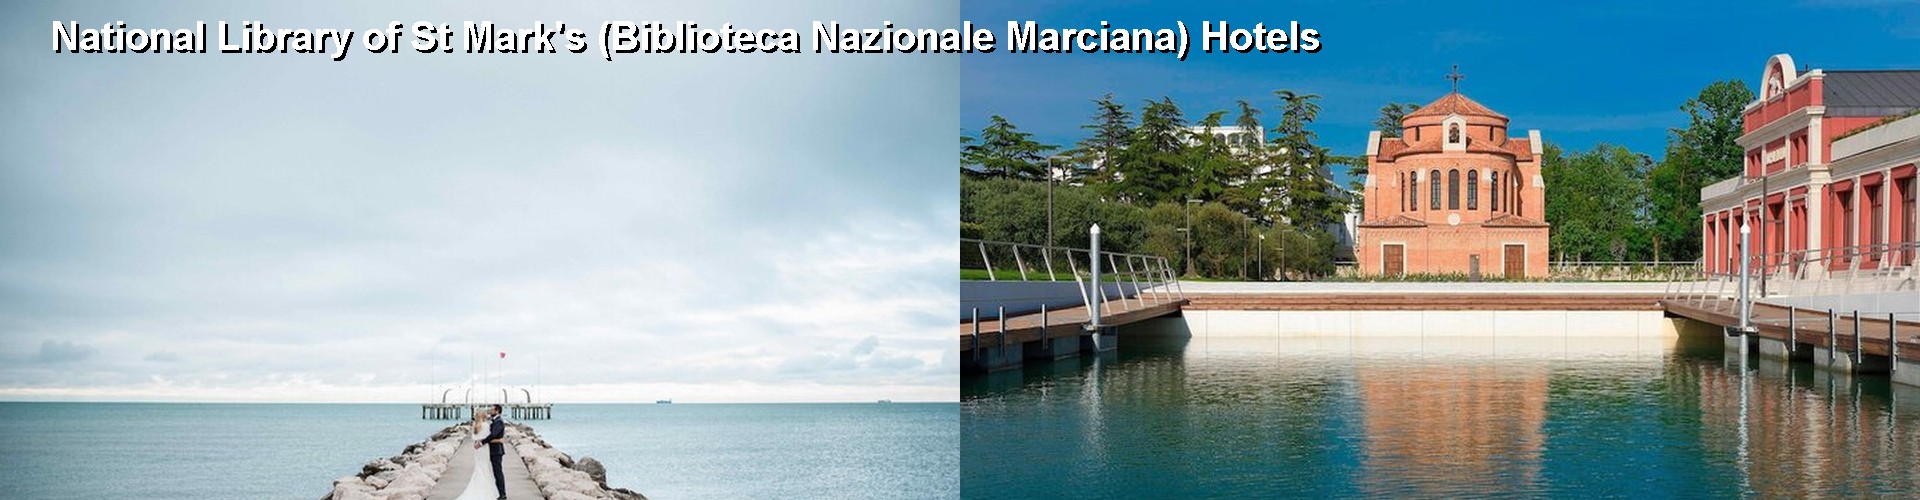 5 Best Hotels near National Library of St Mark's (Biblioteca Nazionale Marciana)